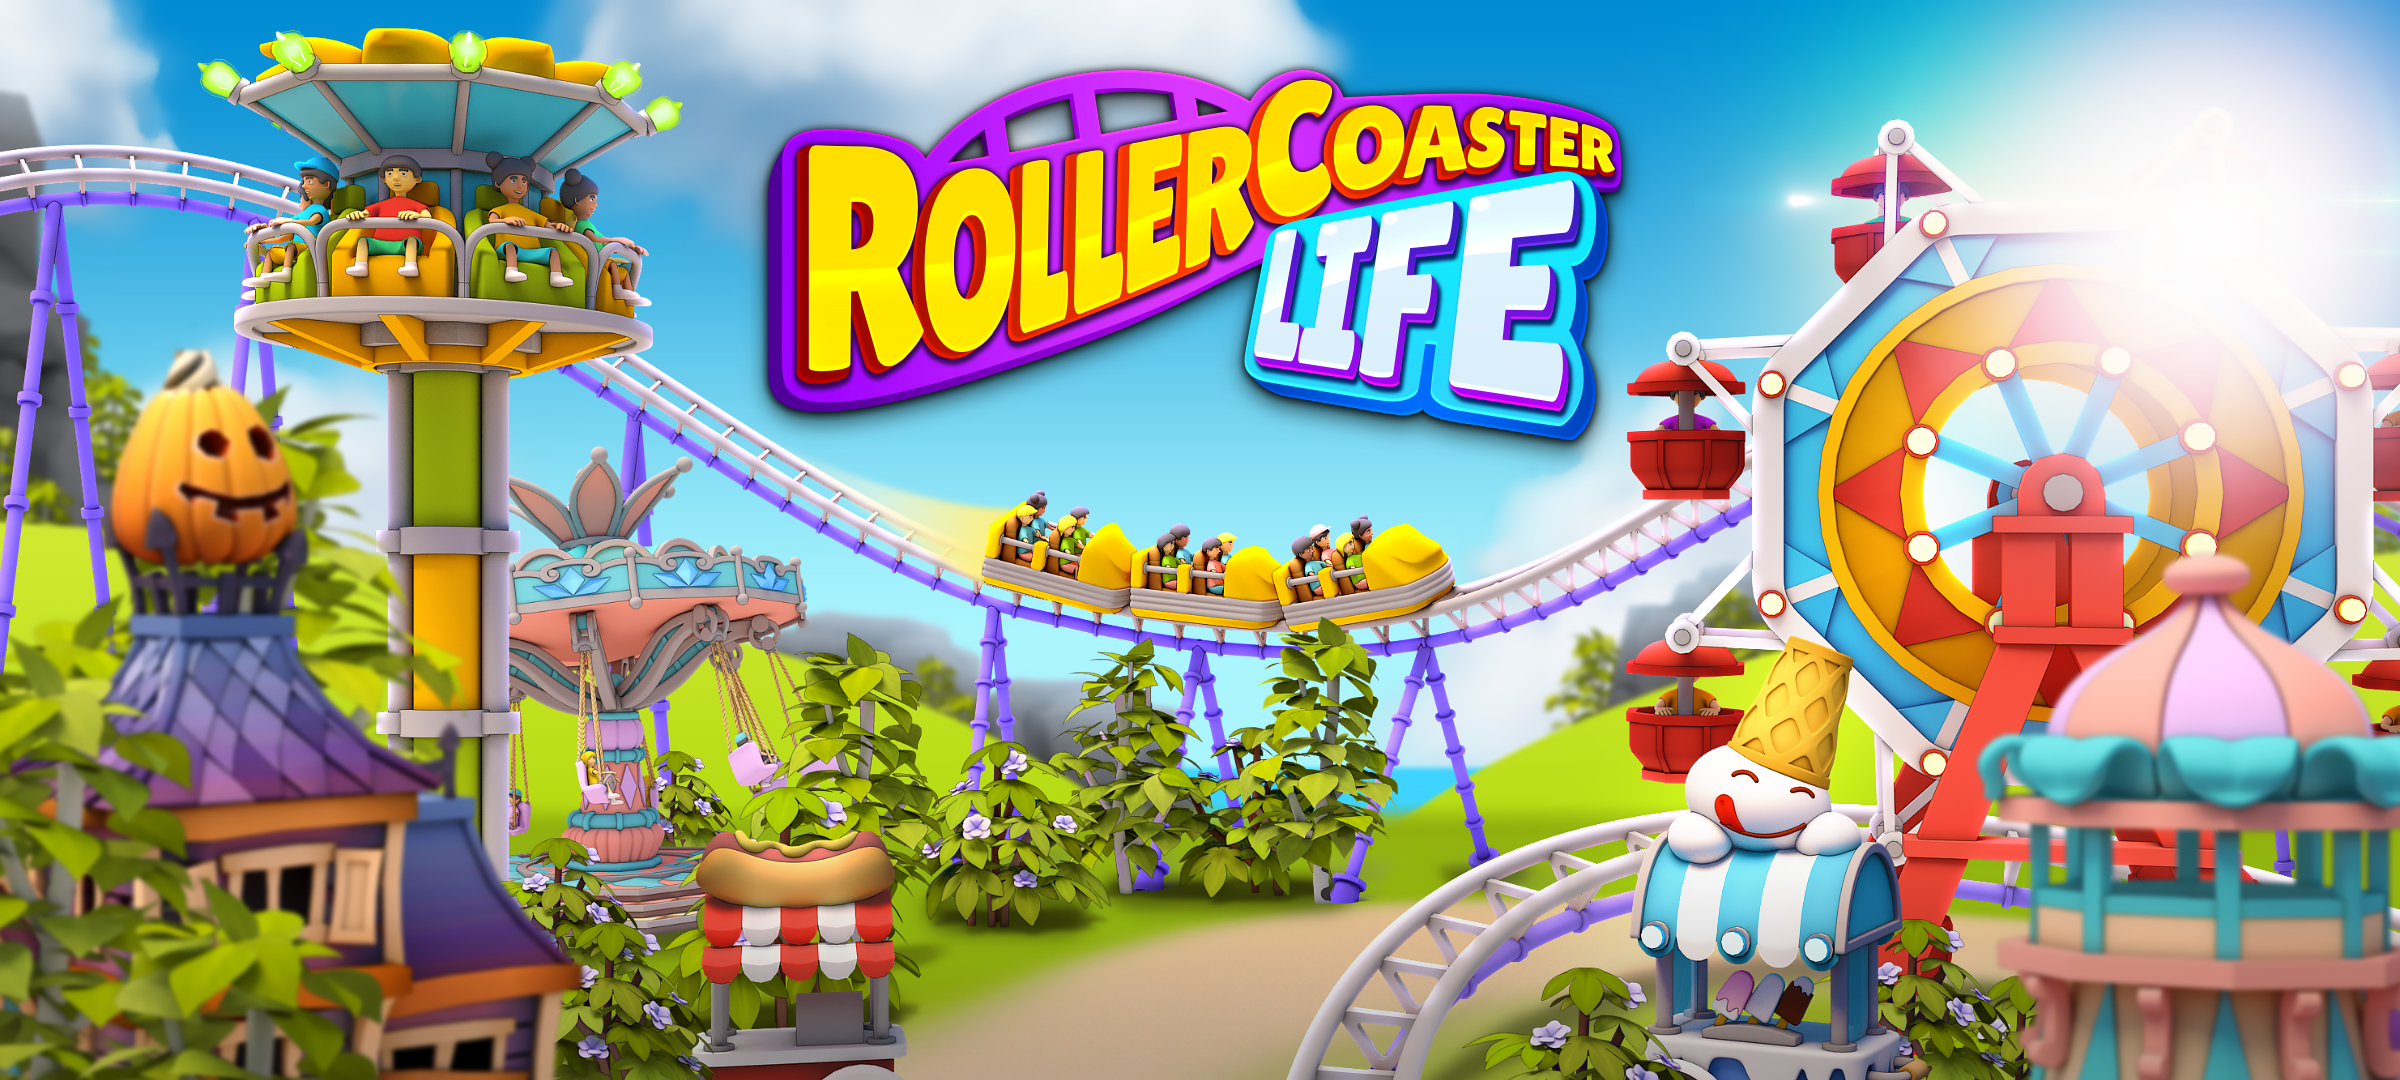 Roller Coaster Life